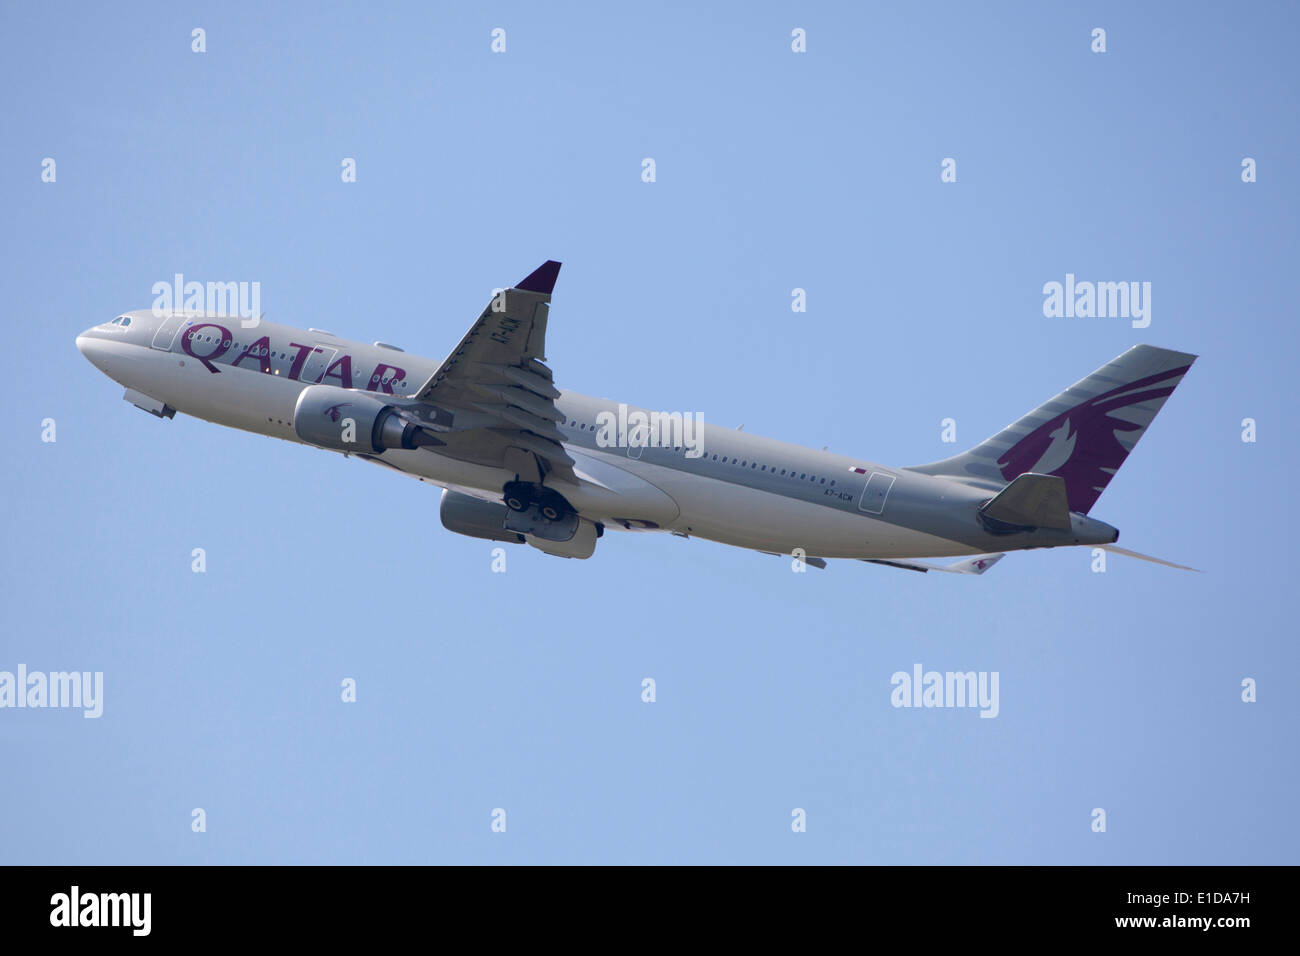 Qatar Airways Airbus A330 taking off Stock Photo